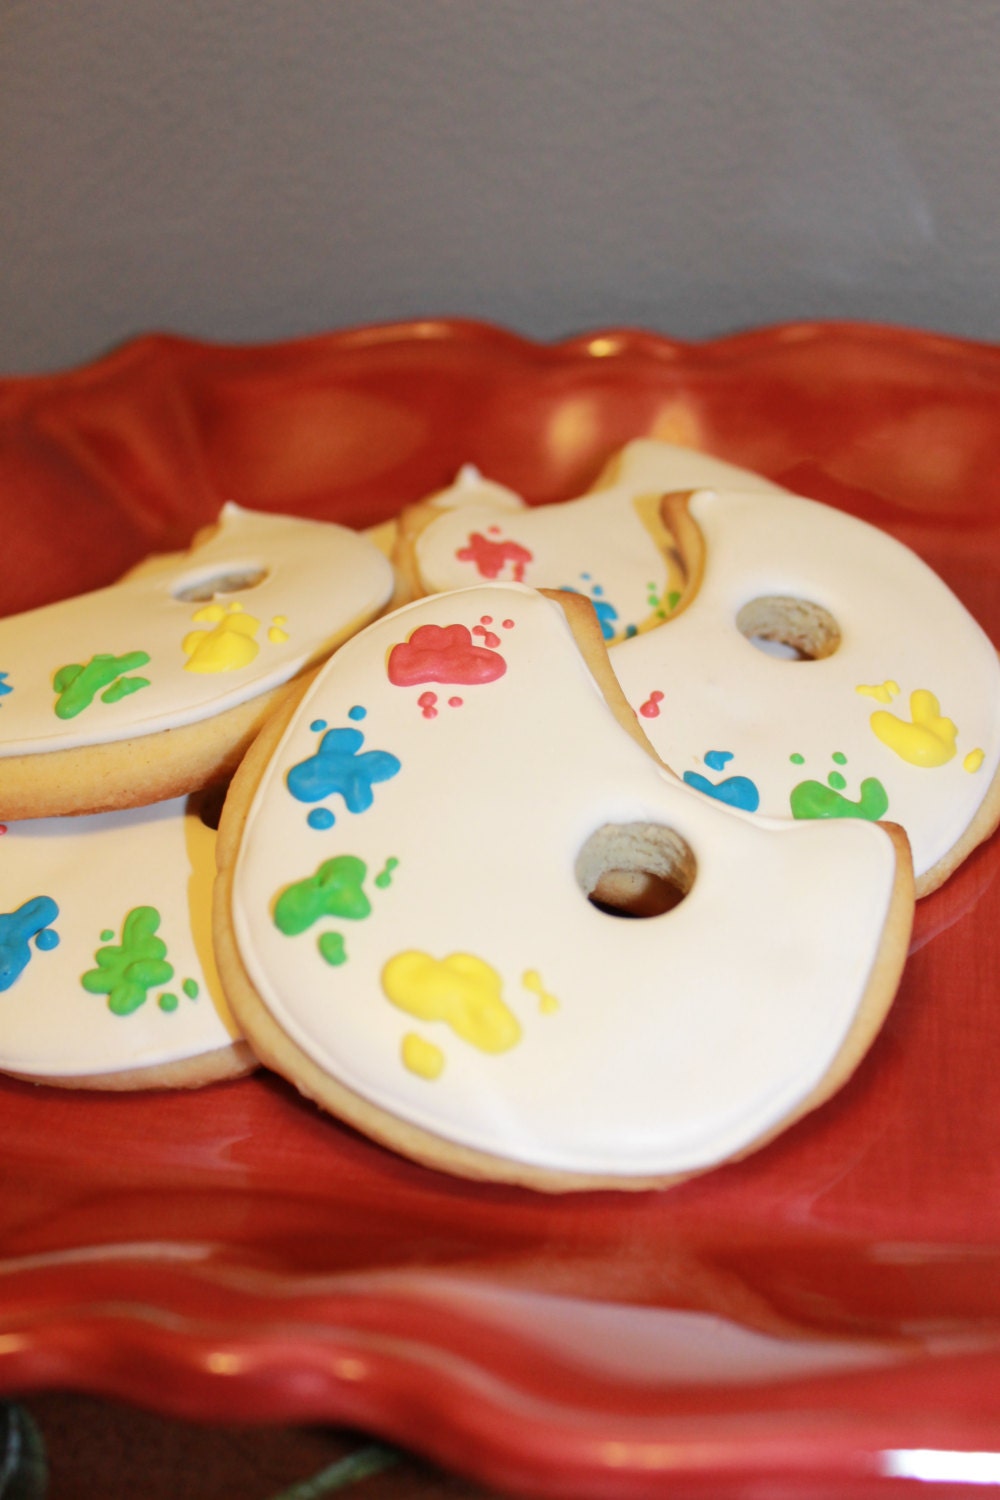 painters pallet cookies One Dozen (12) - Ladybug bake shop